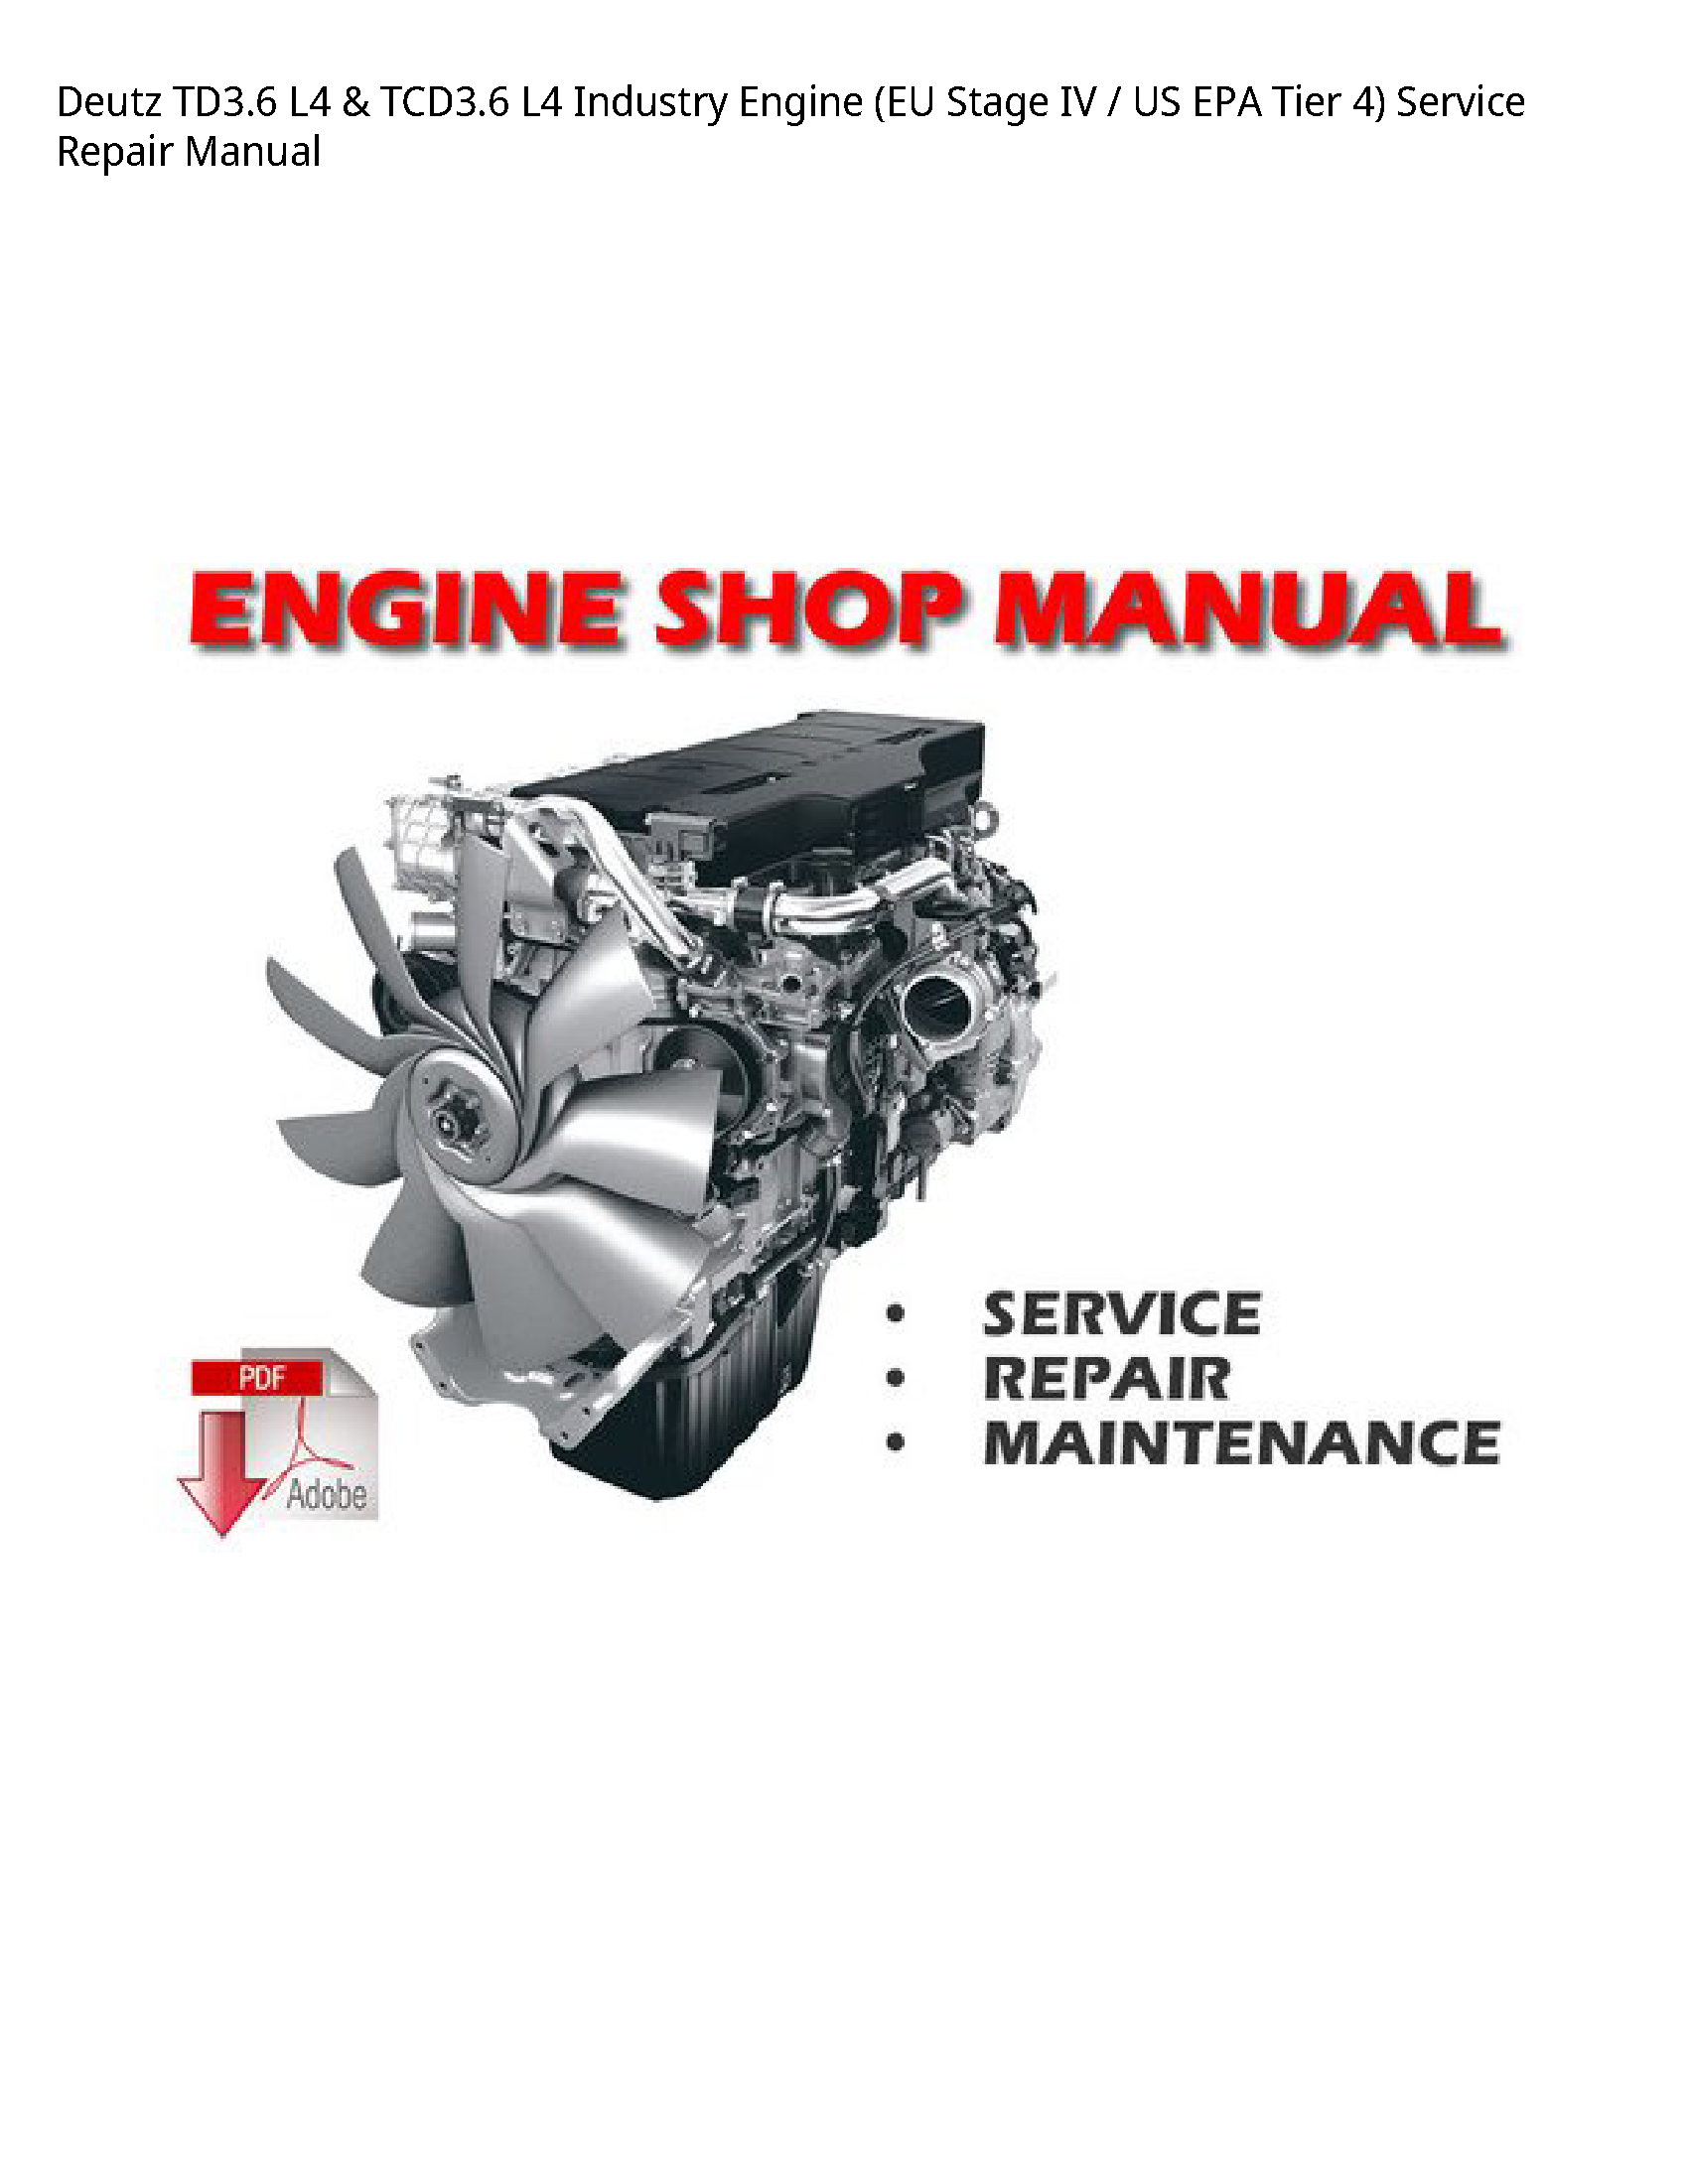 Deutz TD3.6 Industry Engine (EU Stage IV US EPA Tier manual